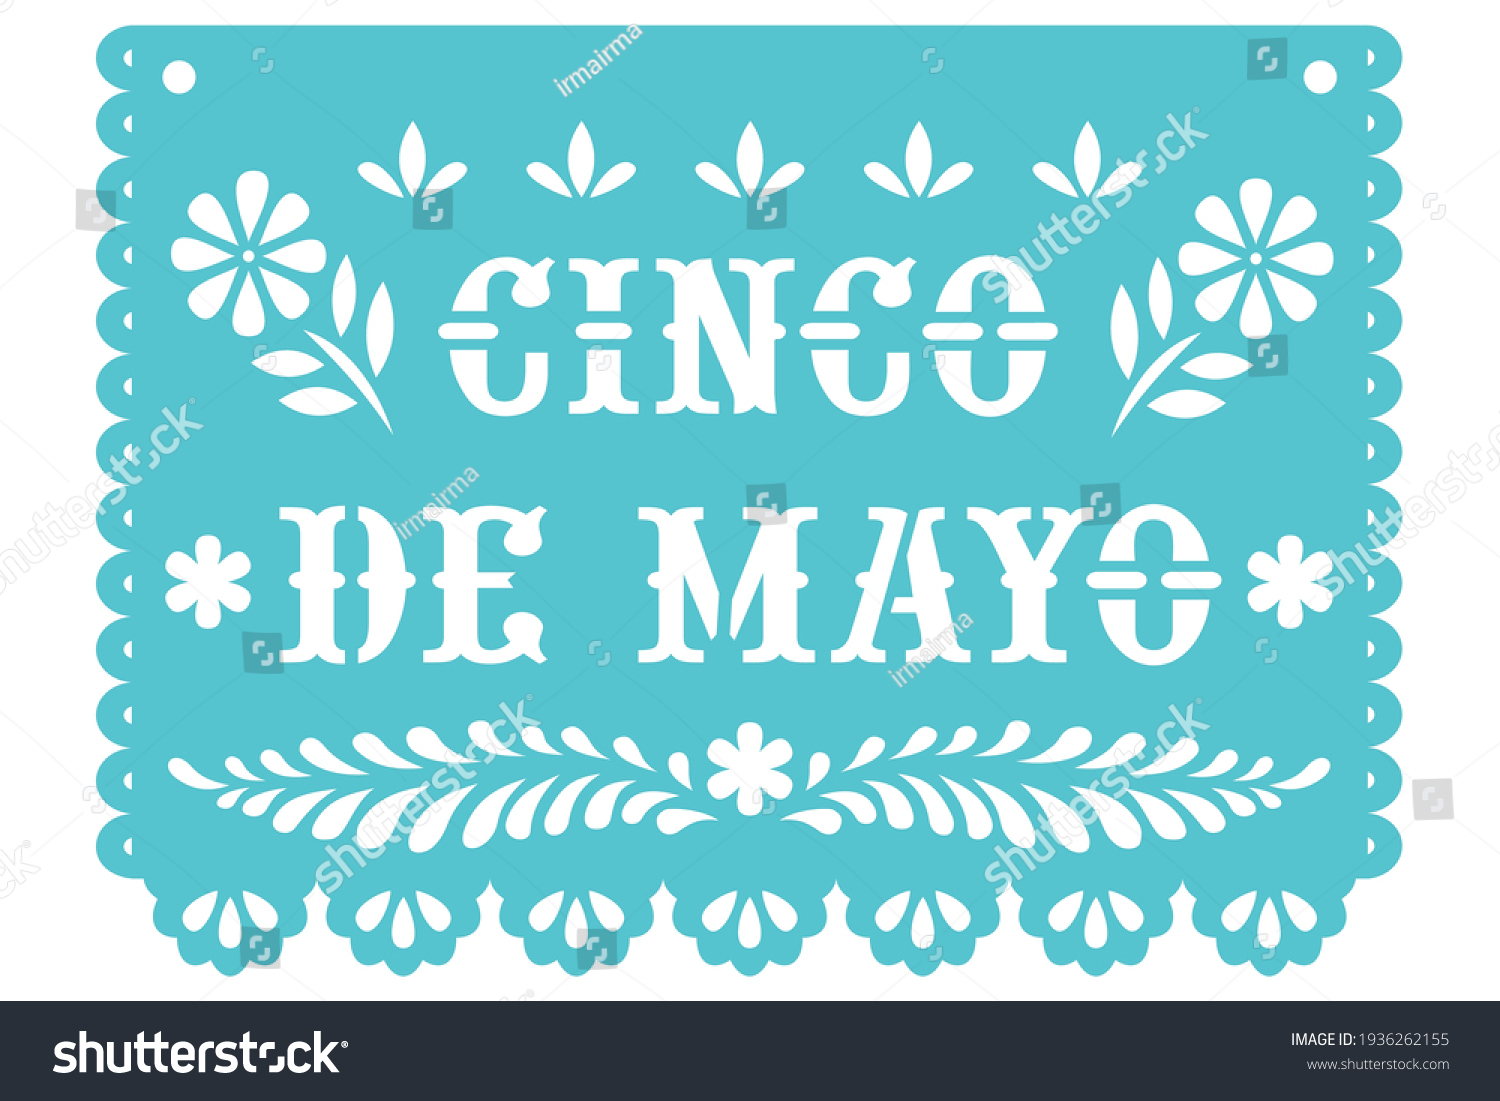 Cinco De Mayo Papel Picado Mexican Stock Vector Royalty Free 1936262155 Shutterstock 2453